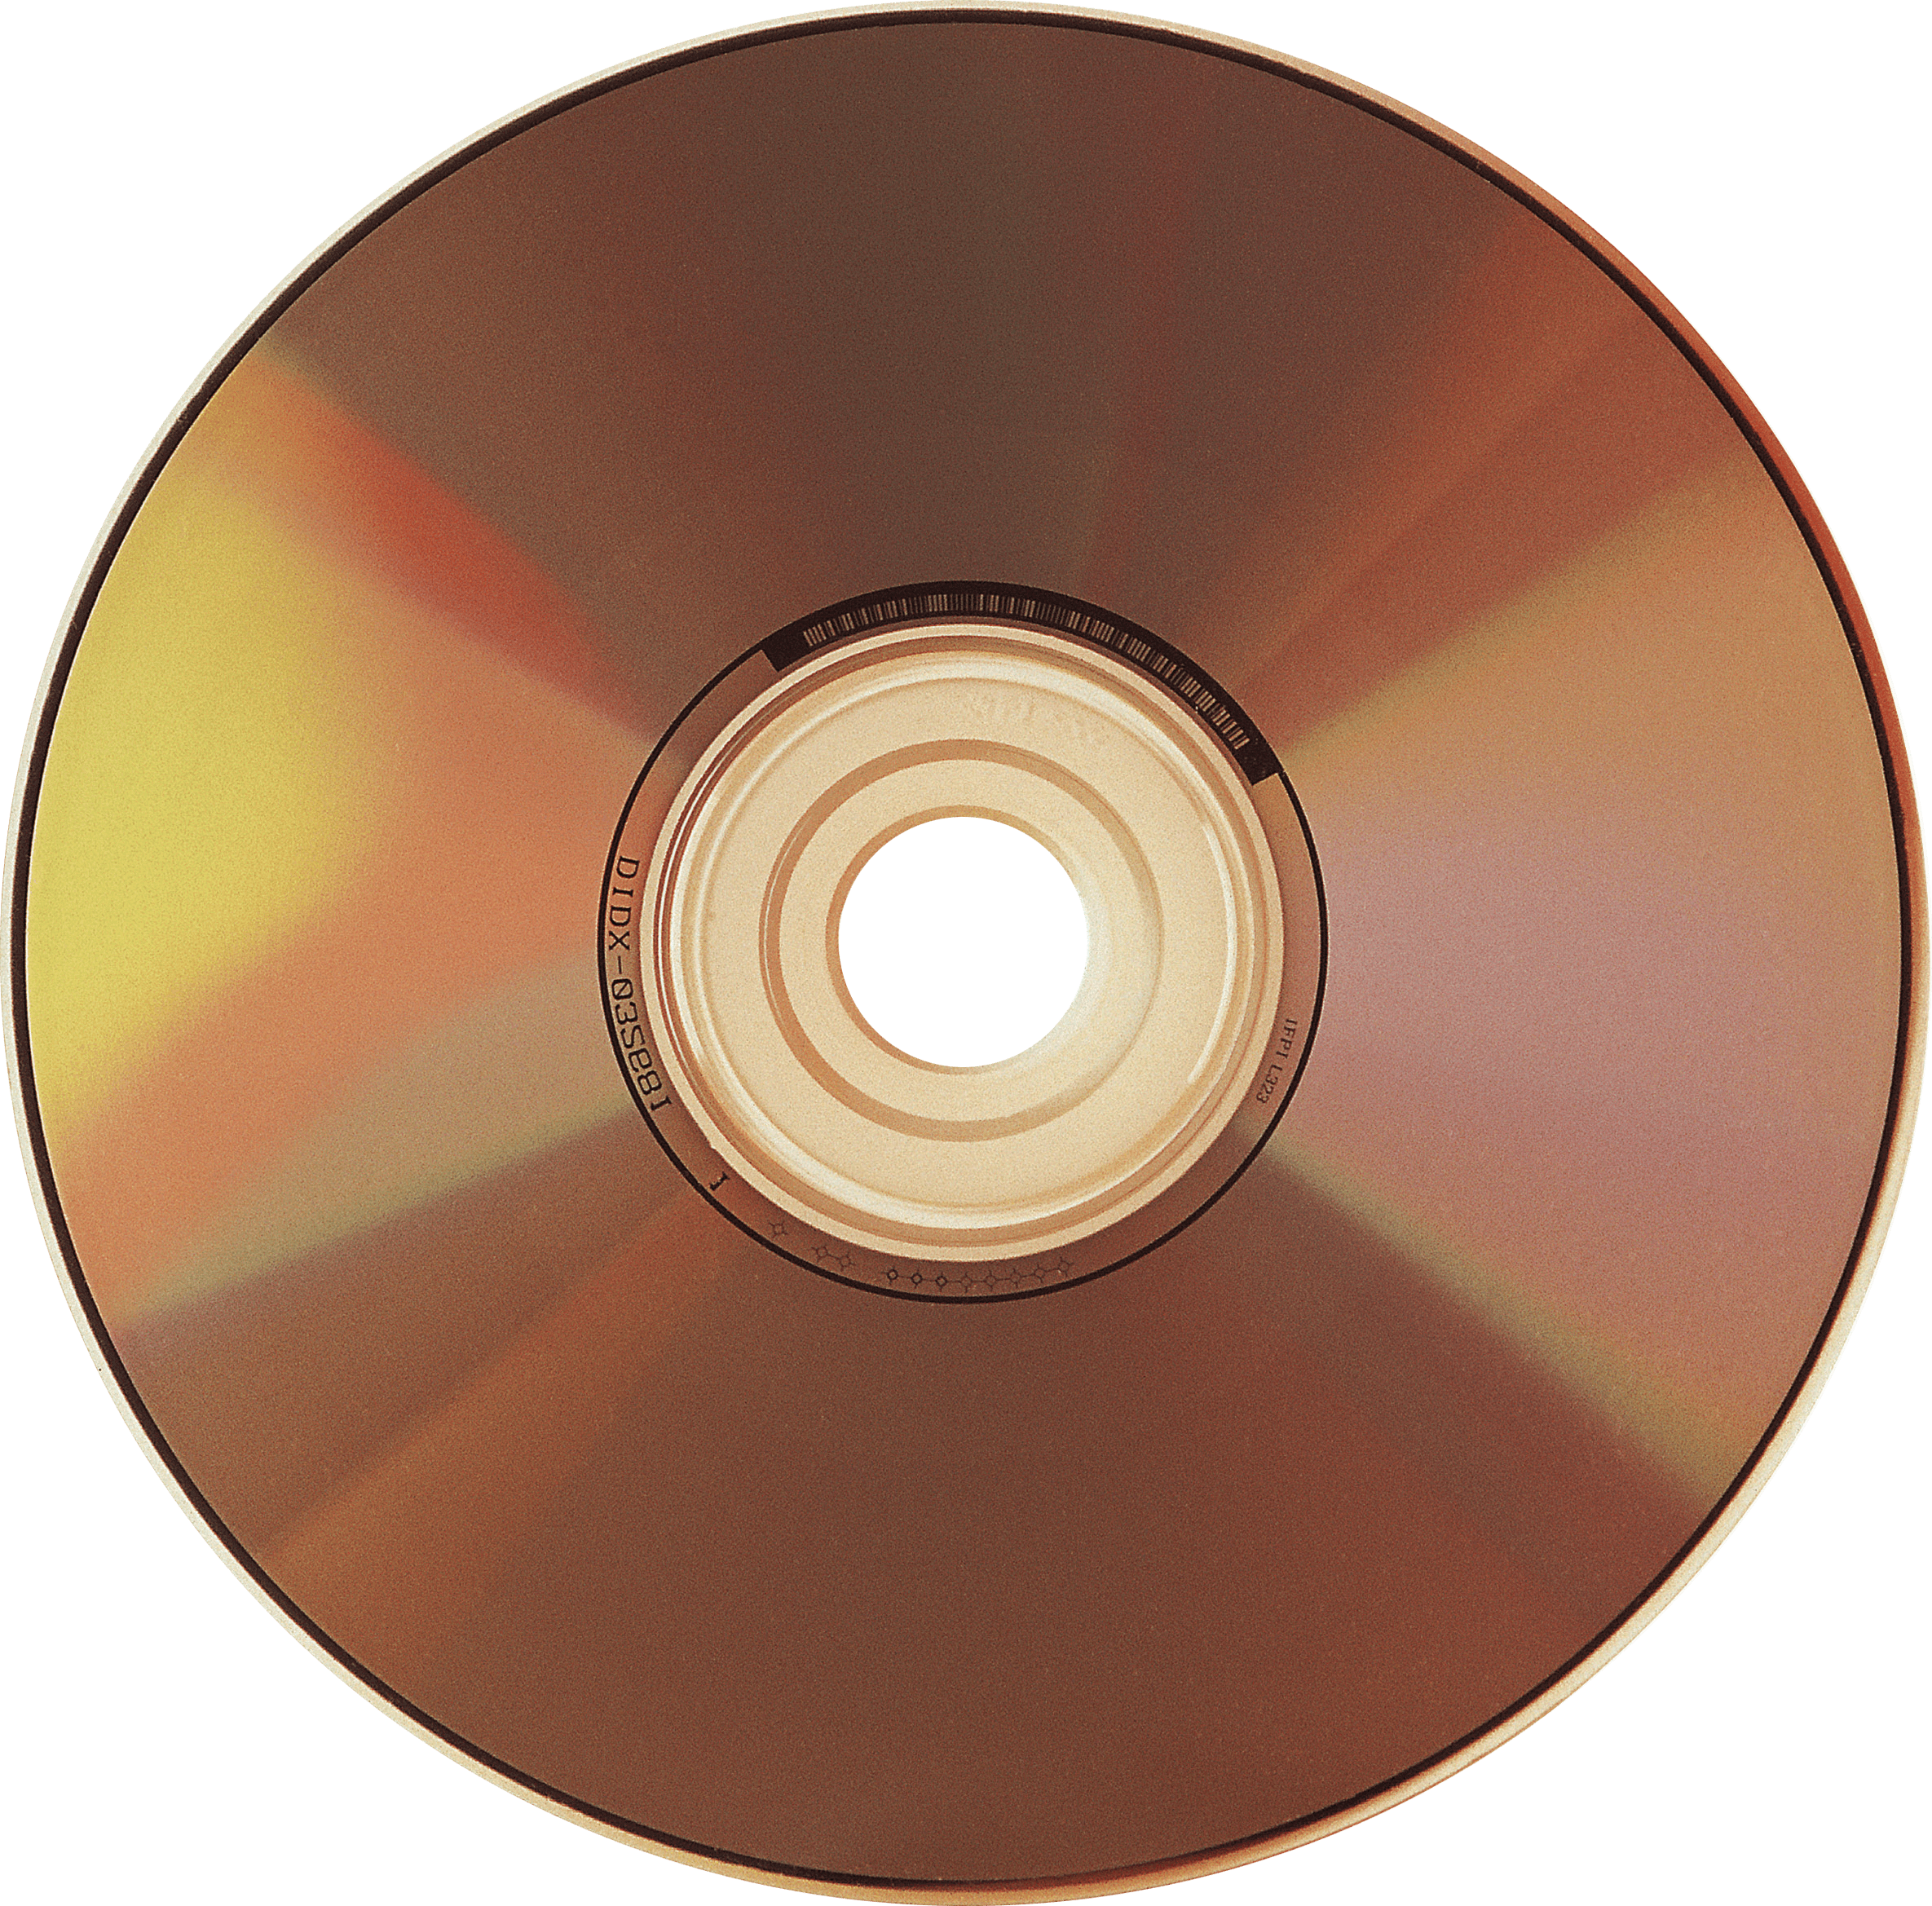 Cd pictures. CD - Compact Disk (компакт диск). CD (Compact Disc) — оптический носитель. CD-R DVD. CD-R (Compact Disk Recorder).